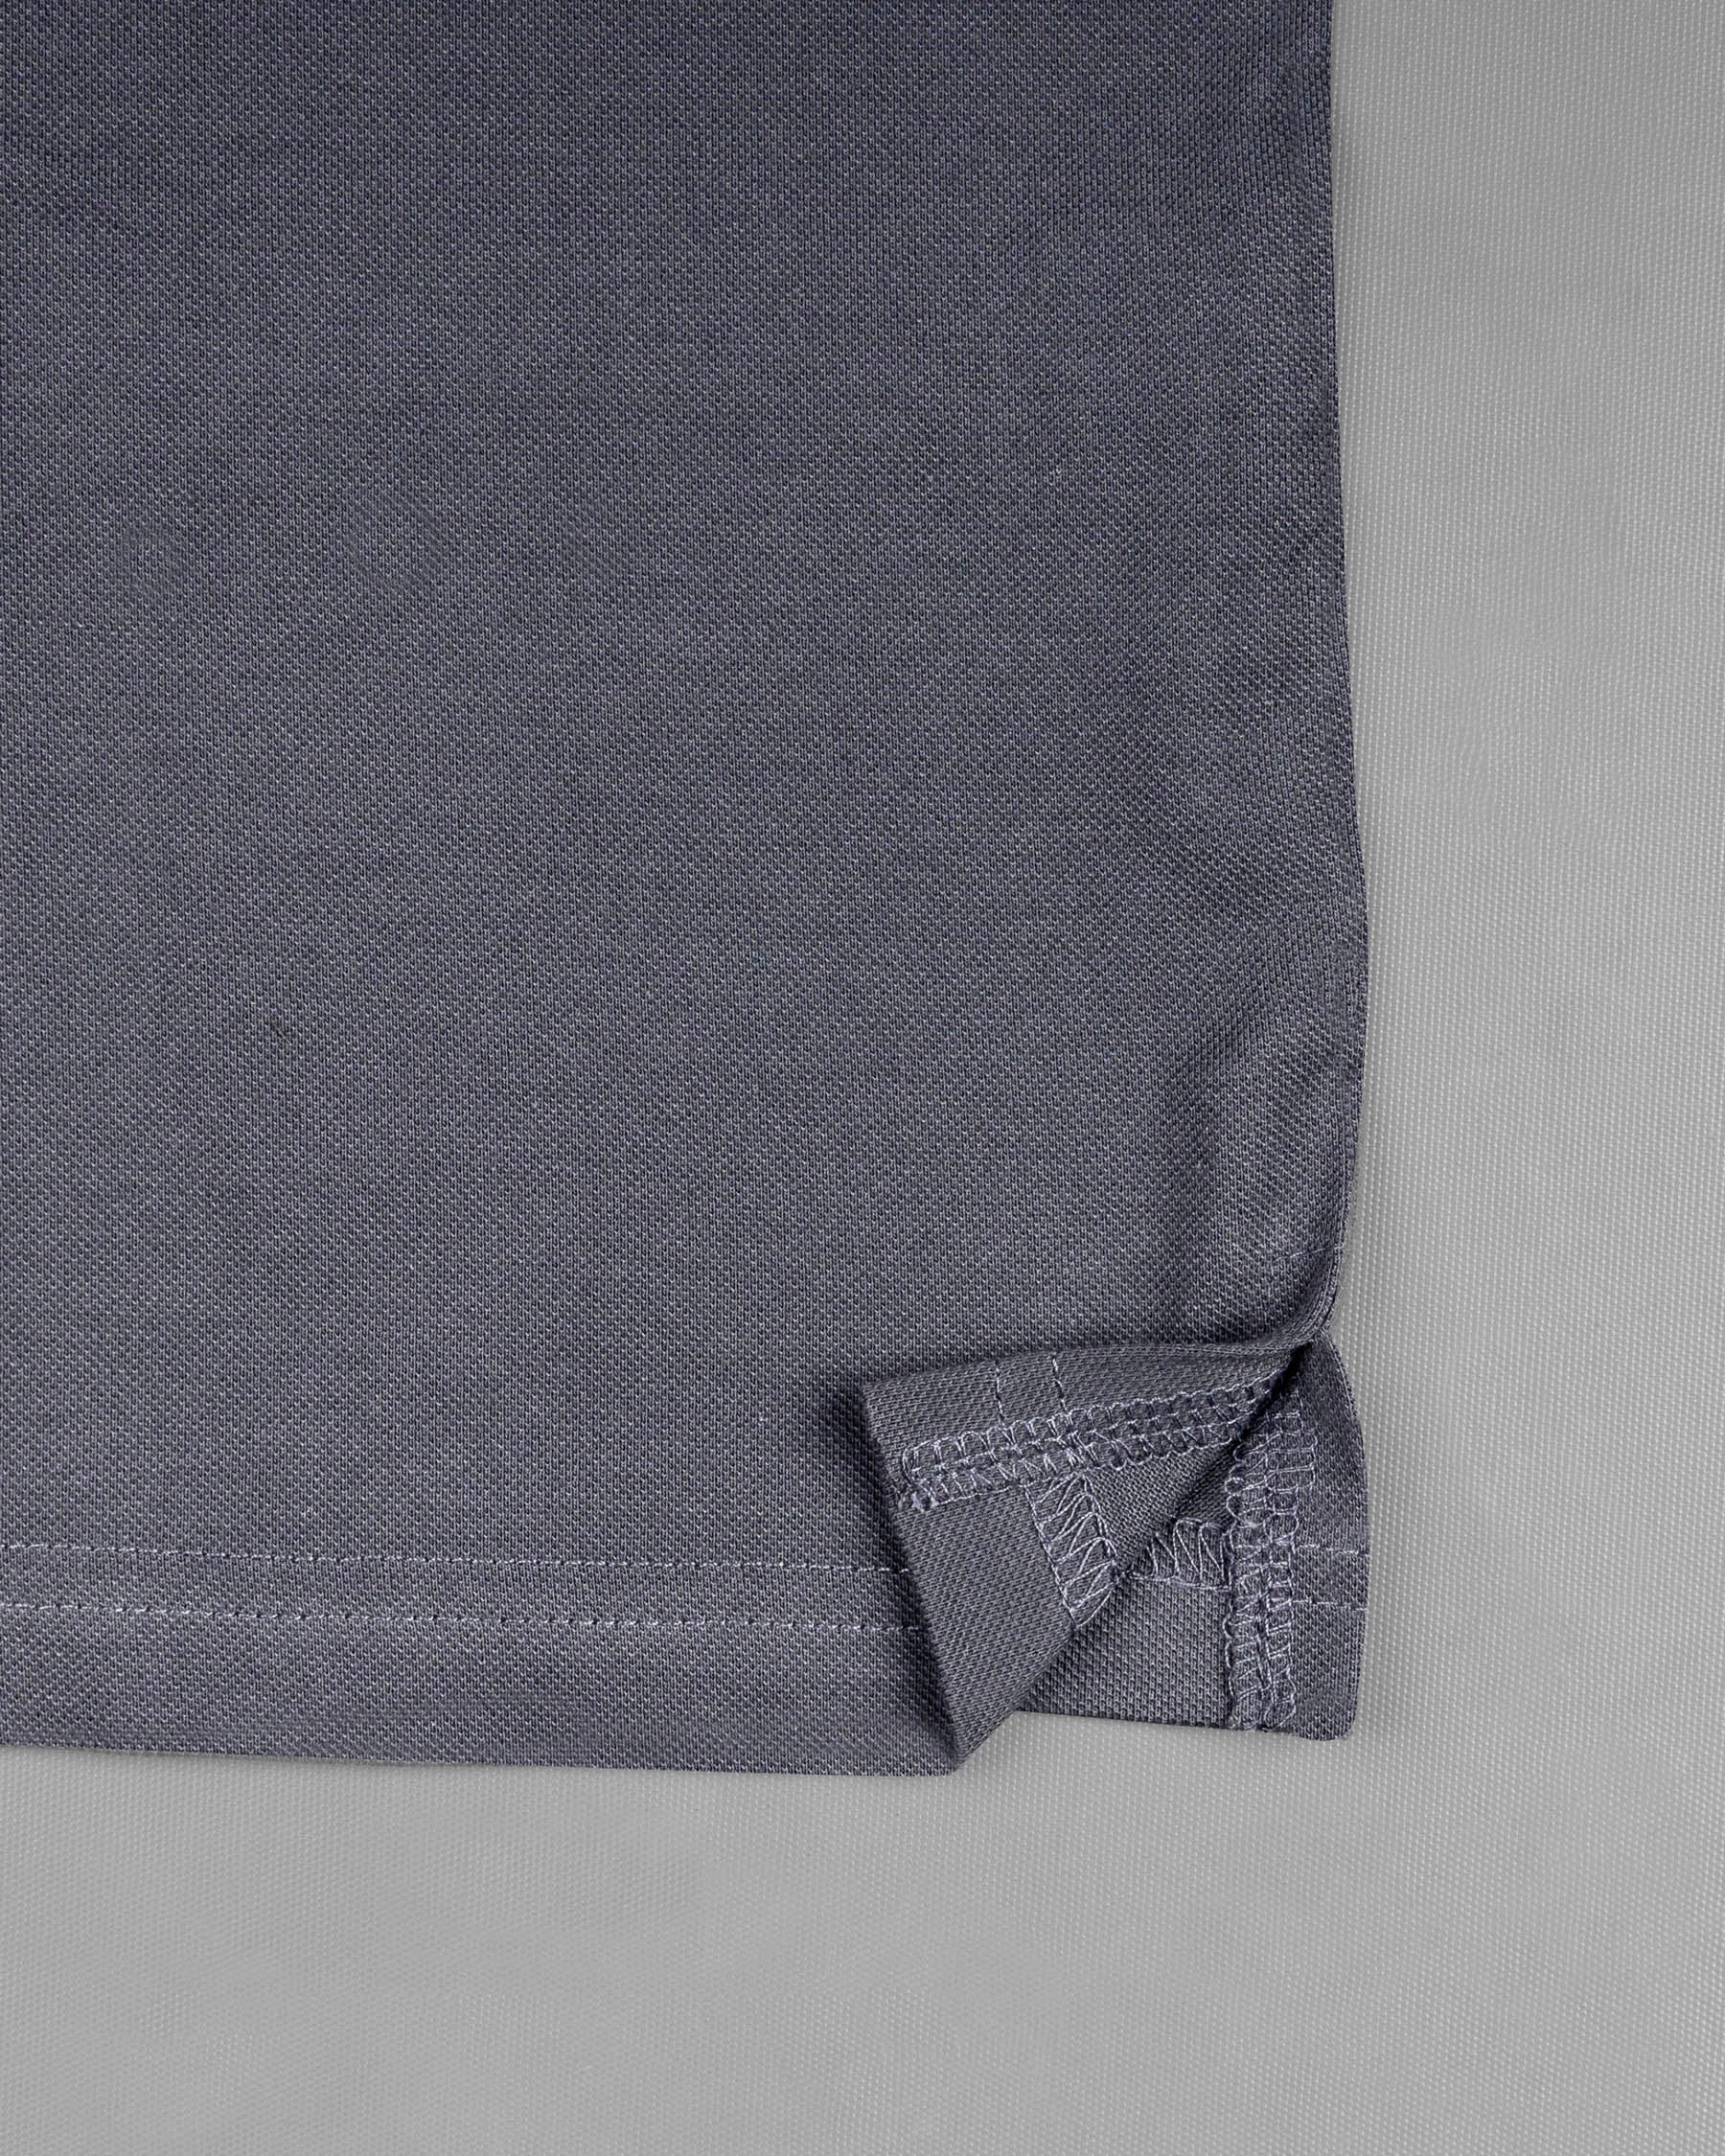 Storm Dust Gray Full Sleeves Premium Cotton Mercerised Pique Polo